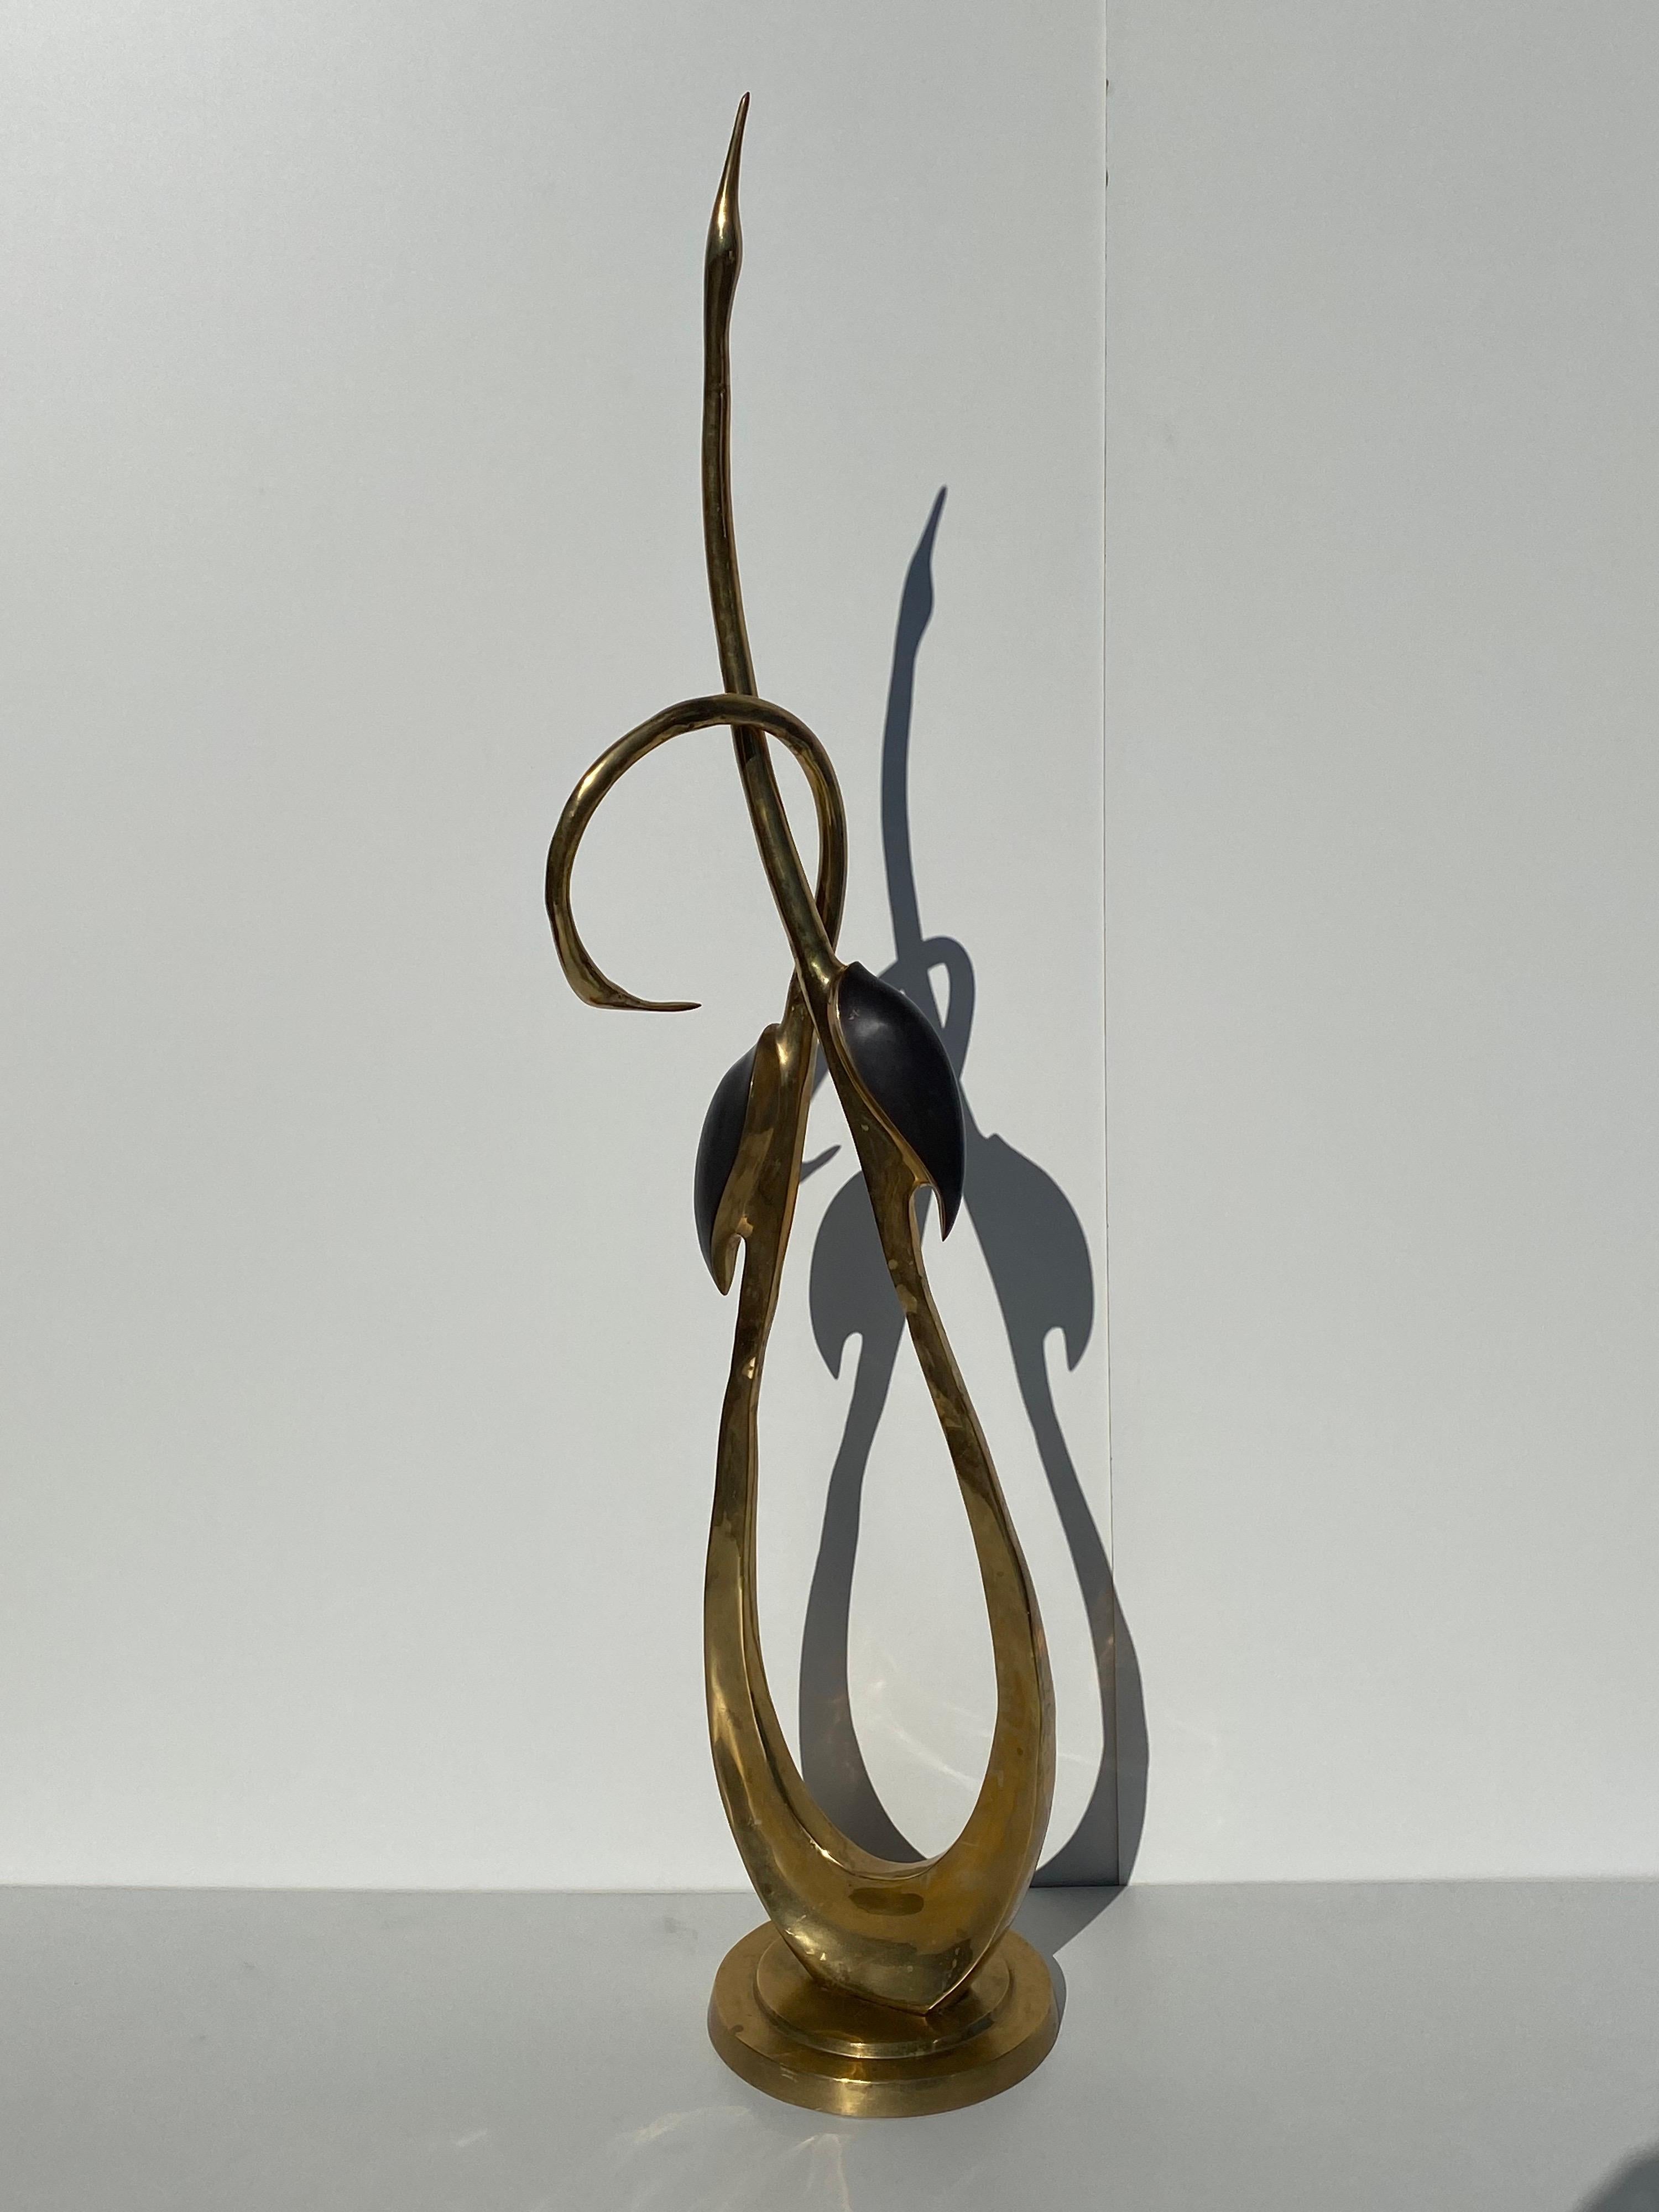 Brass graceful cranes sculpture by Boris Lovet-Lorski.